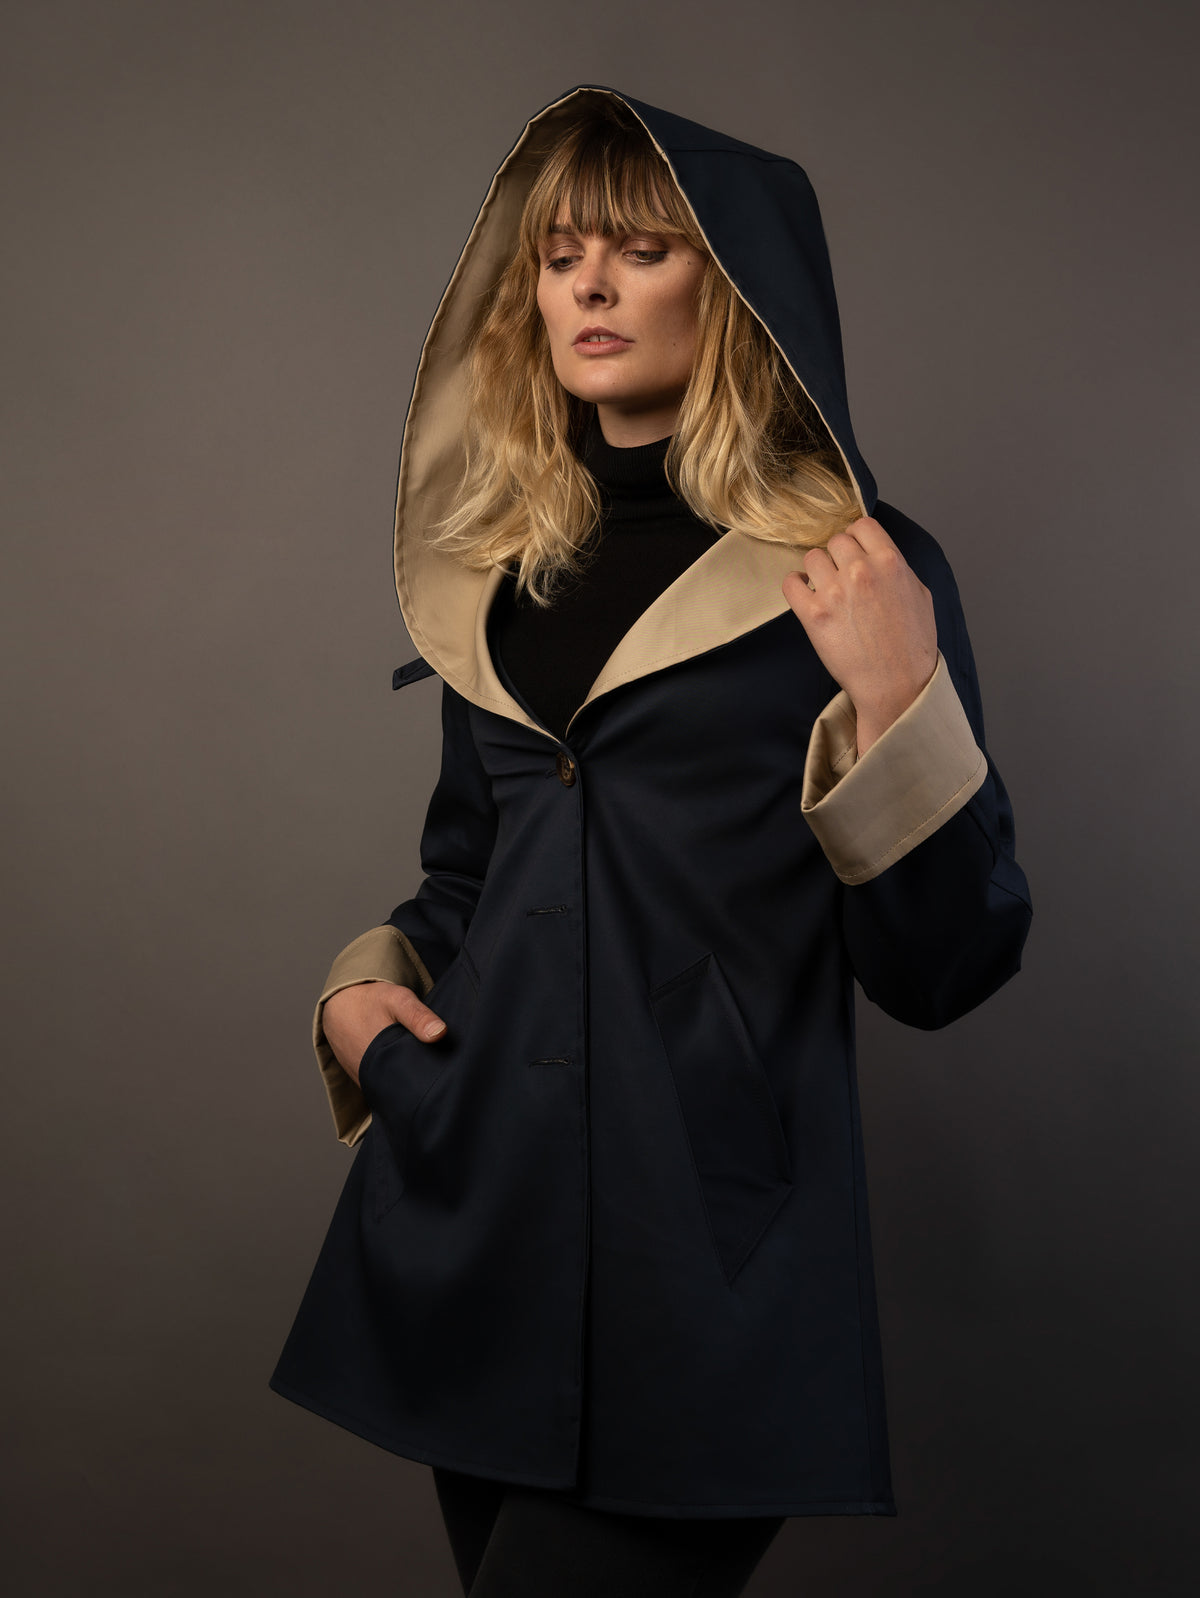 100% Waterproof Ladies Cotton Raincoat with hood. Made in the UK. 